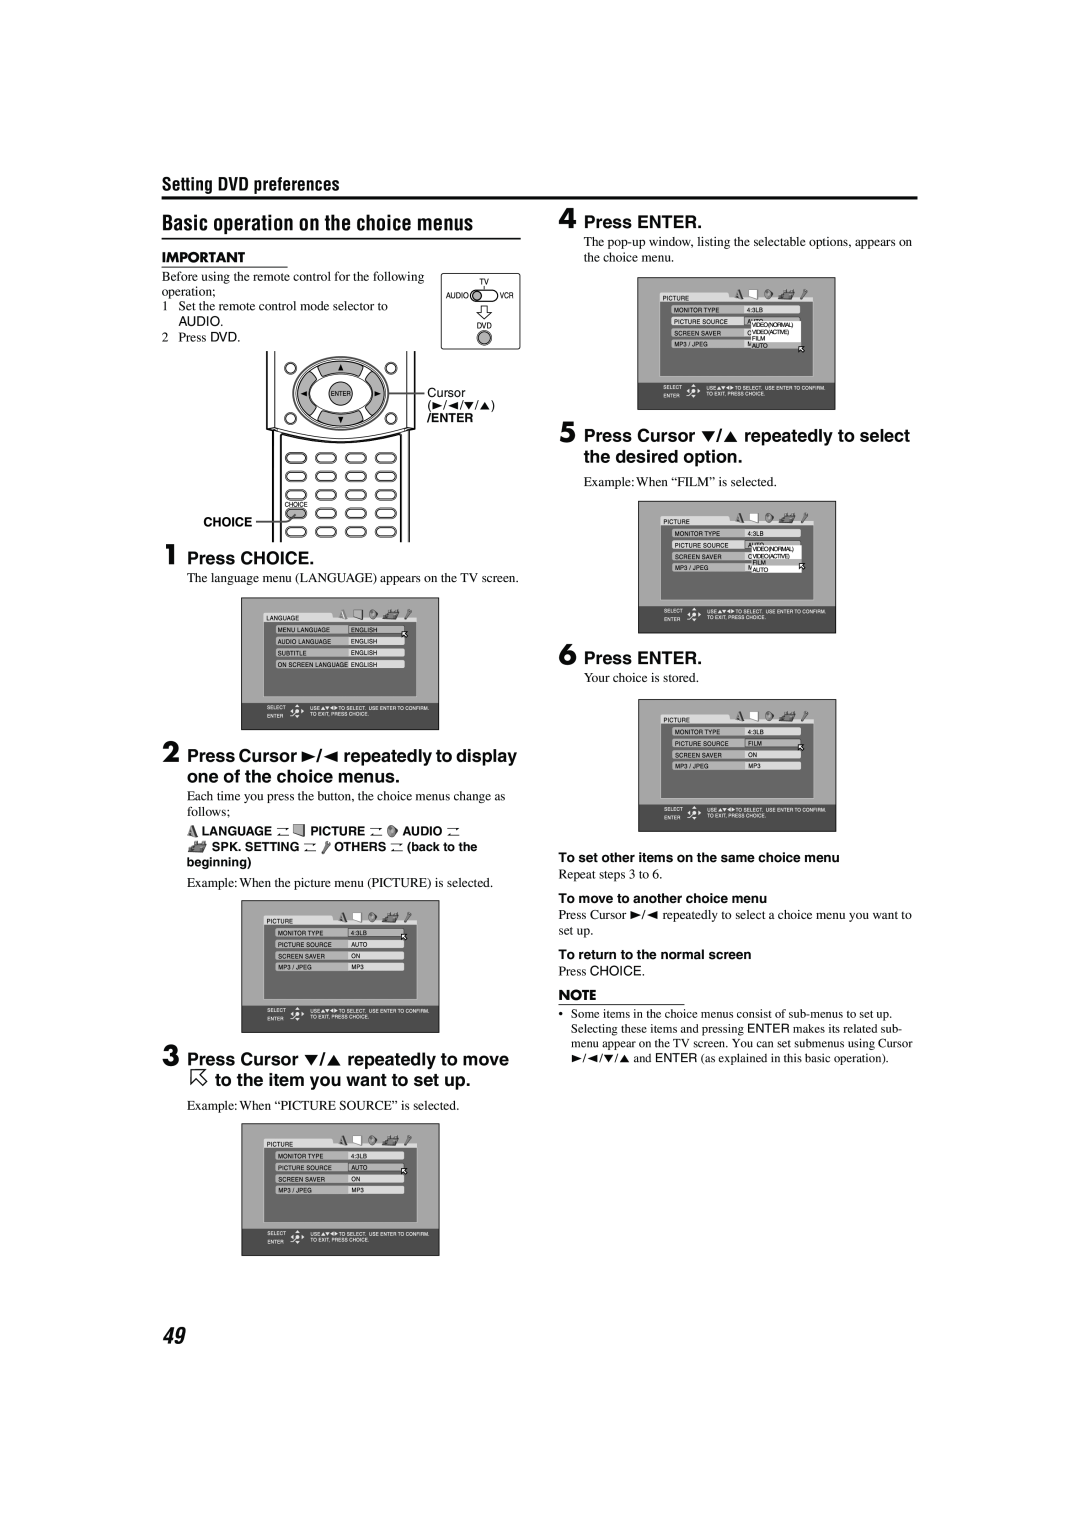 JVC M45 manual Basic operation on the choice menus, Press ENTER, Press CHOICE, Press Cursor //5 repeatedly to move 